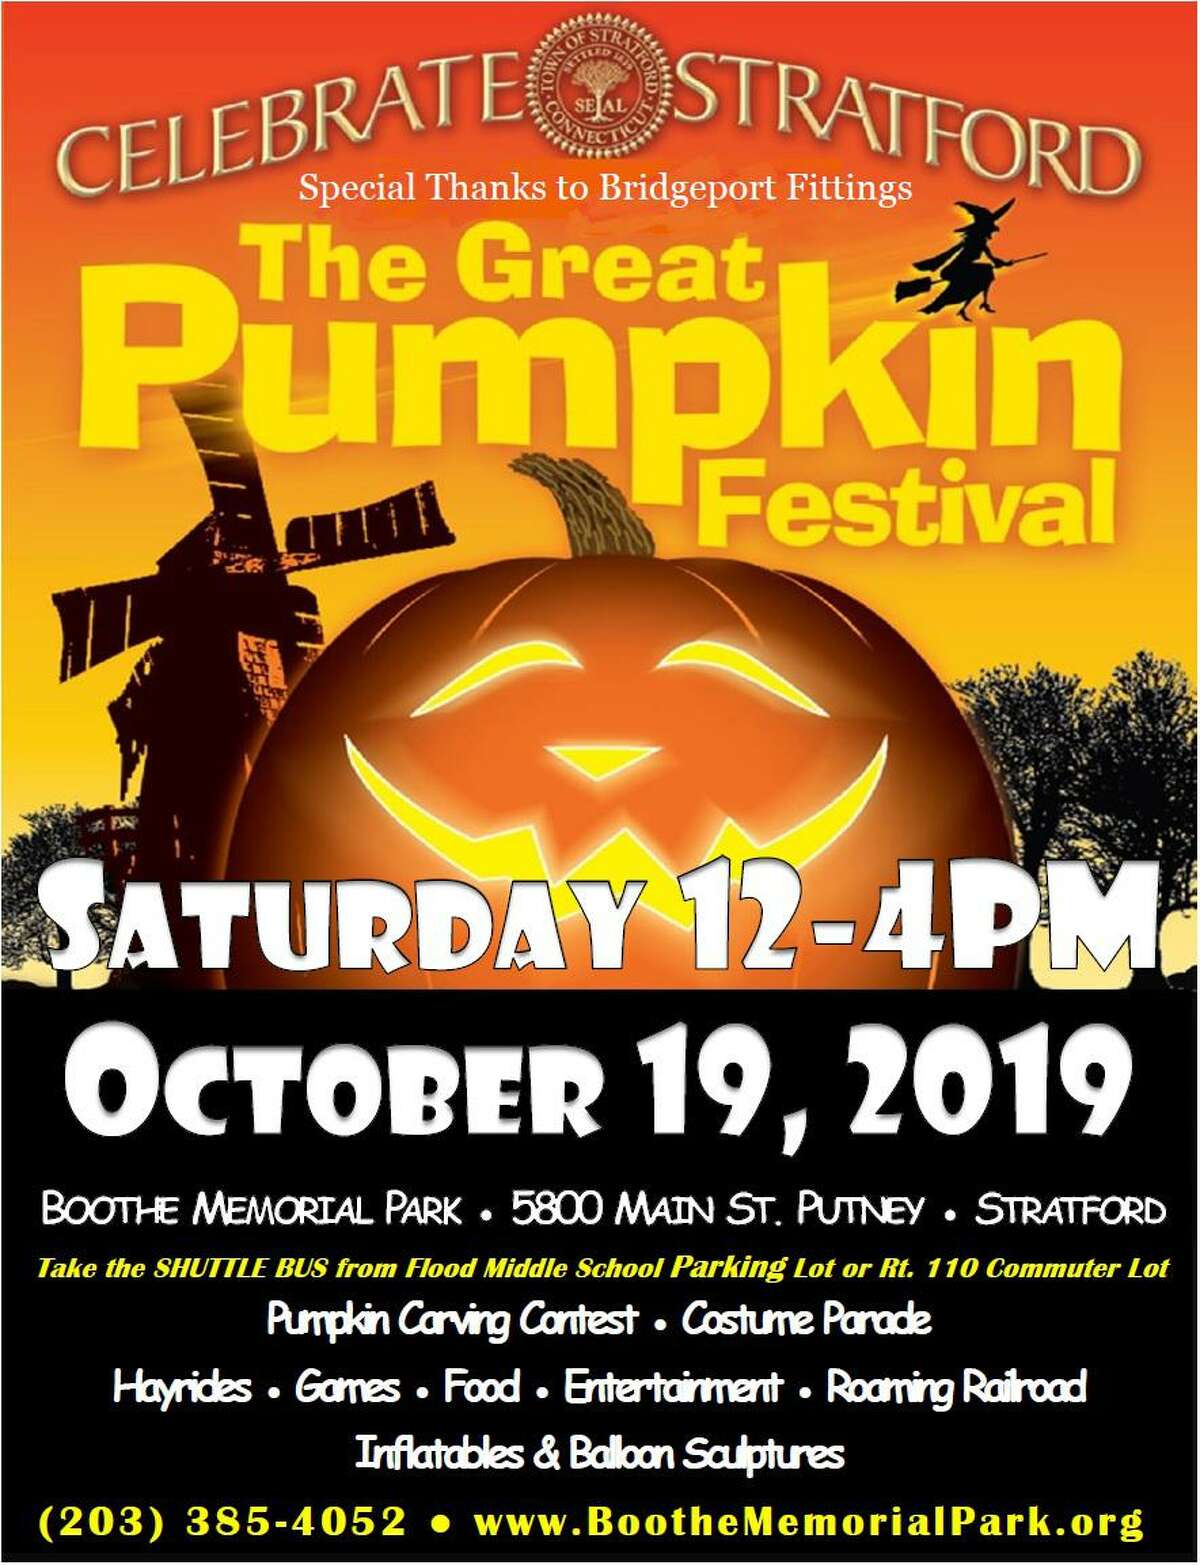 Stratford’s Great Pumpkin Festival is Oct. 19